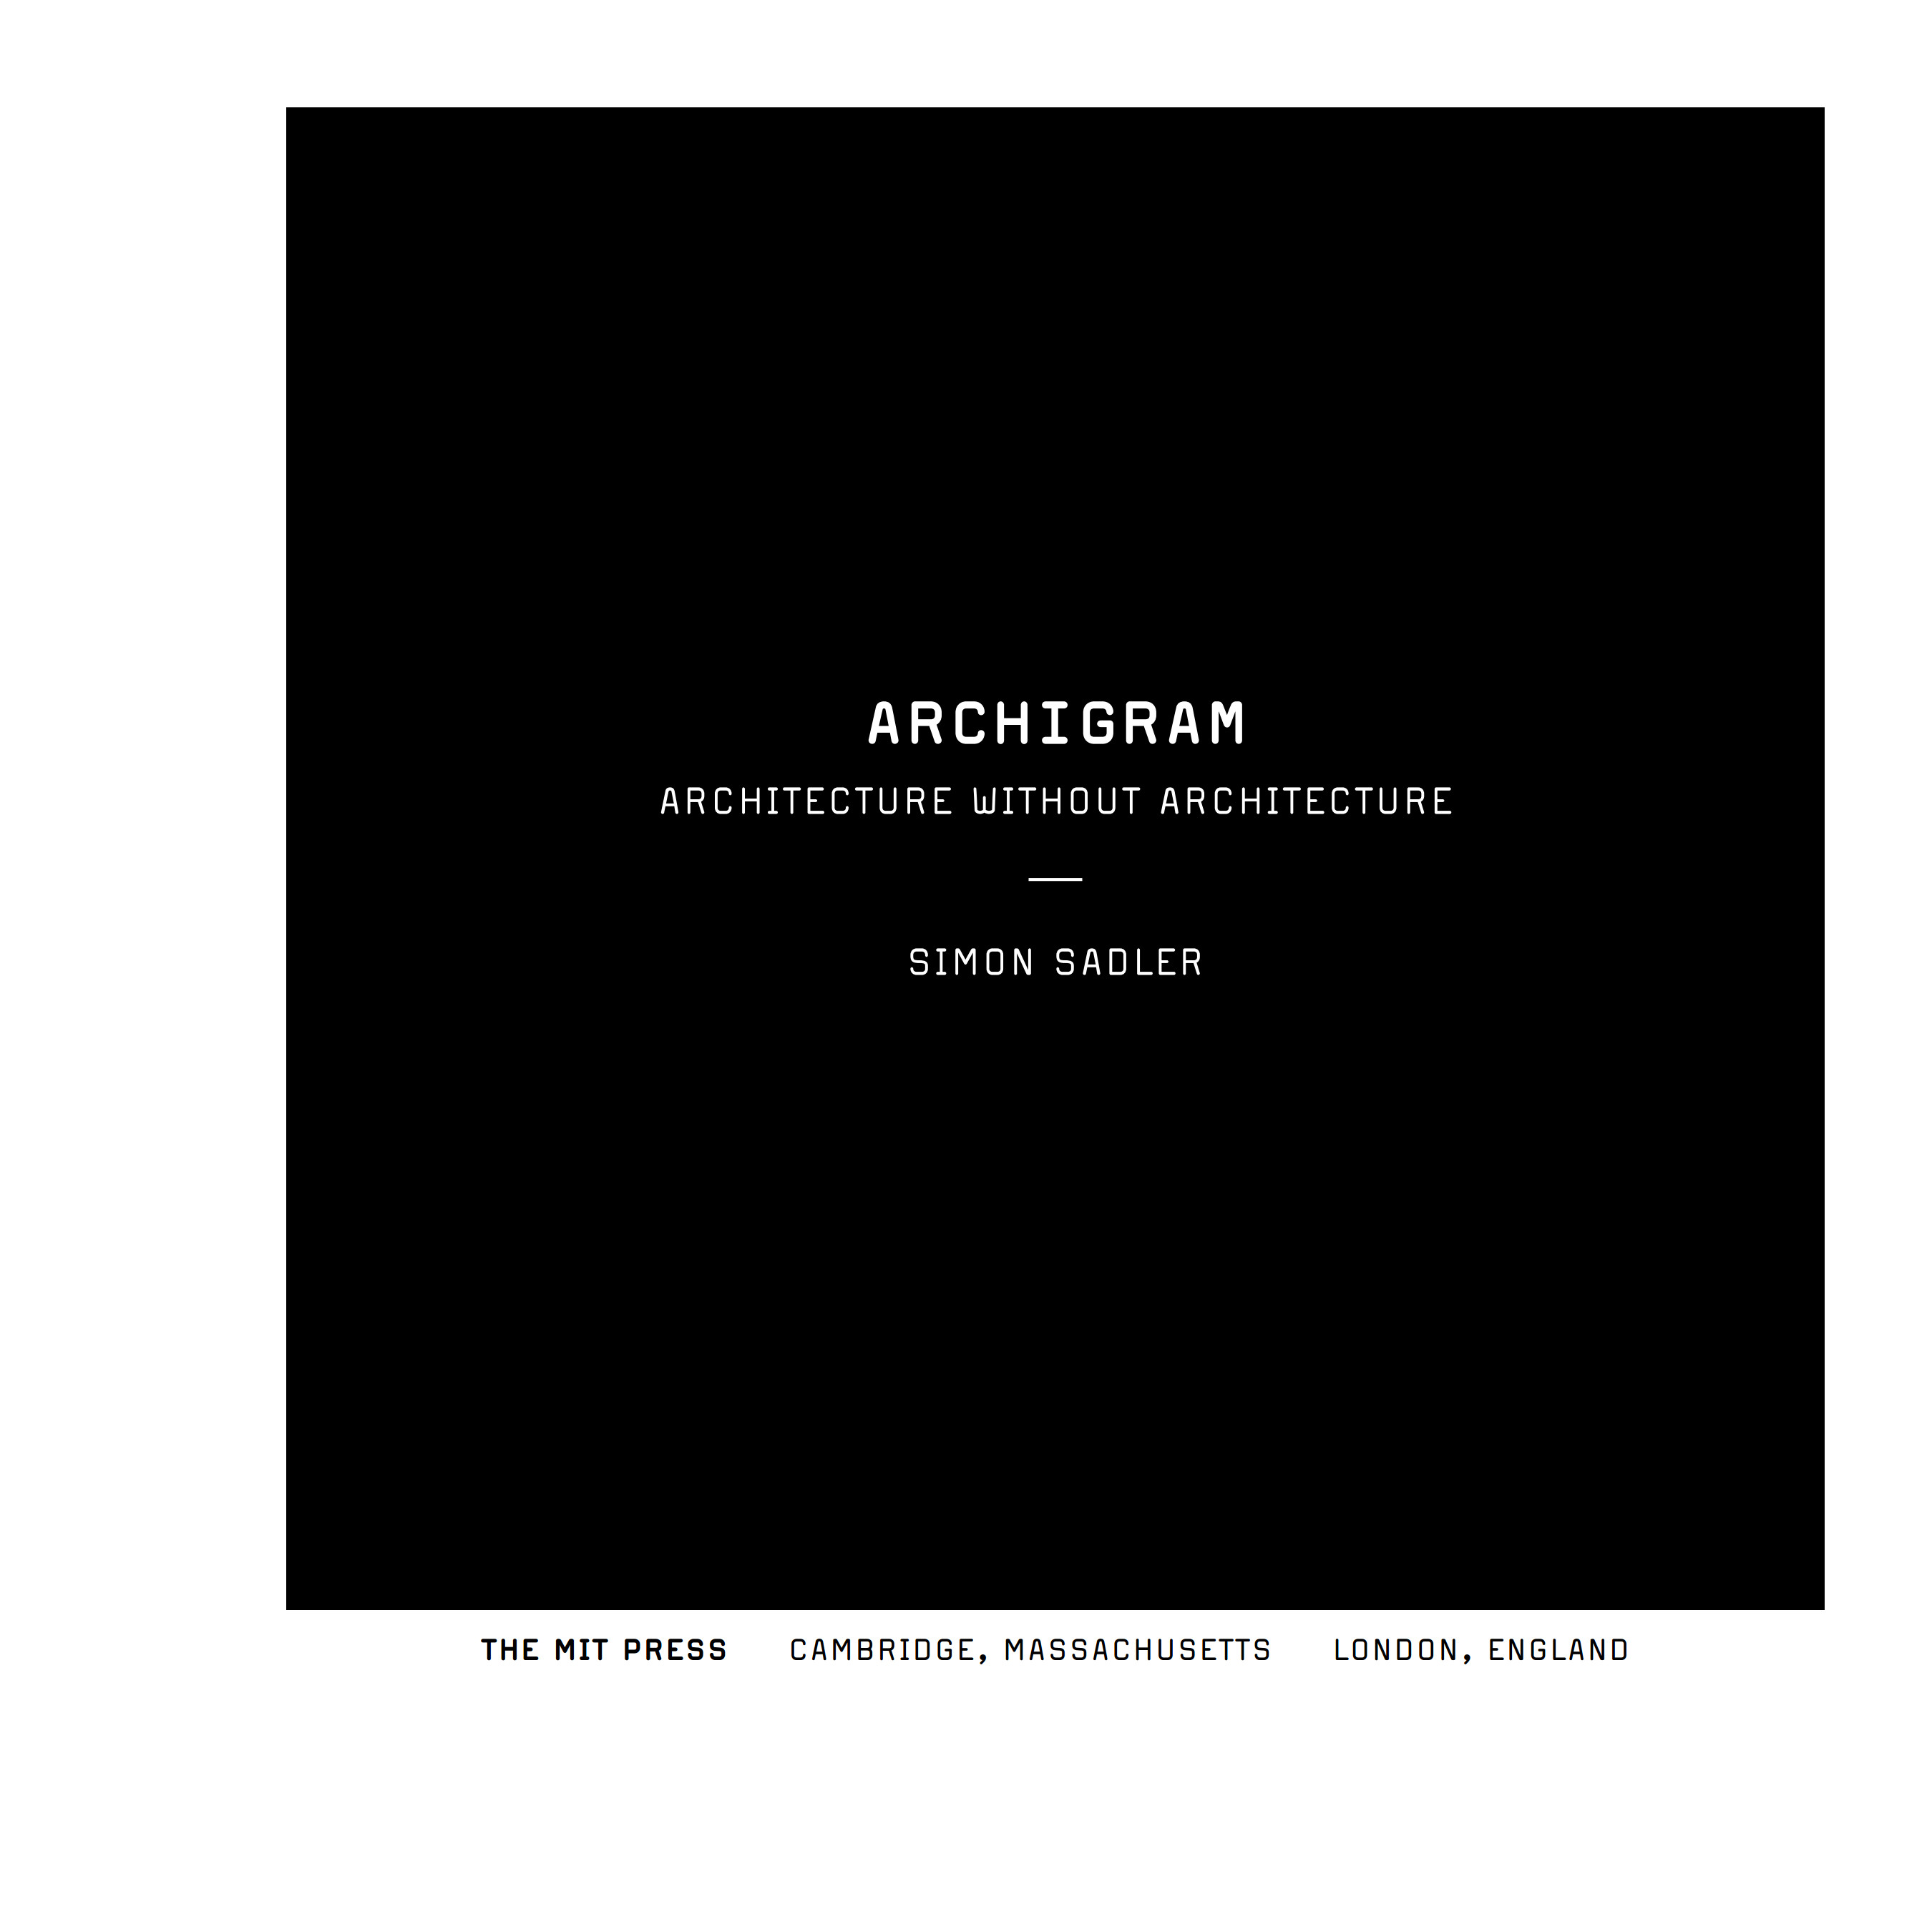 Archigram : Architecture without architecture / Simon Sadler ; Massachusetts institute of technology. — Cambridge, Massachusetts ; London, England : The MIT Press, 2005